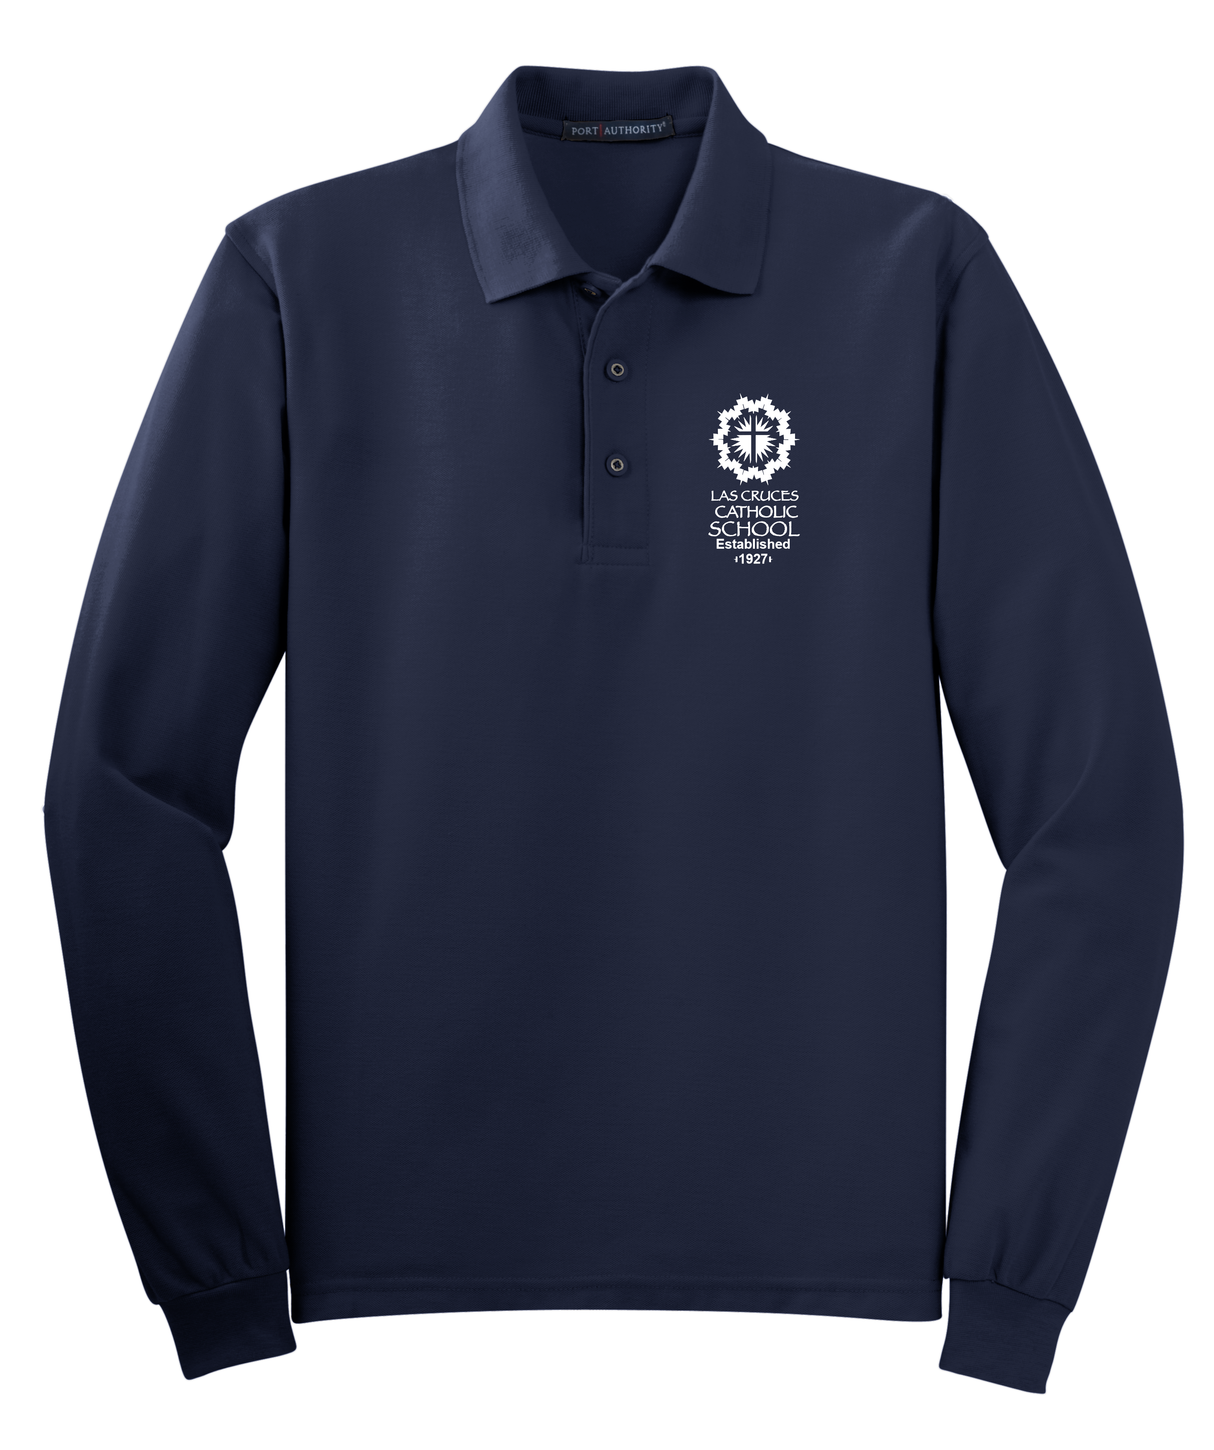 LCCS Middle School Adult Uniform Long-Sleeve Polo